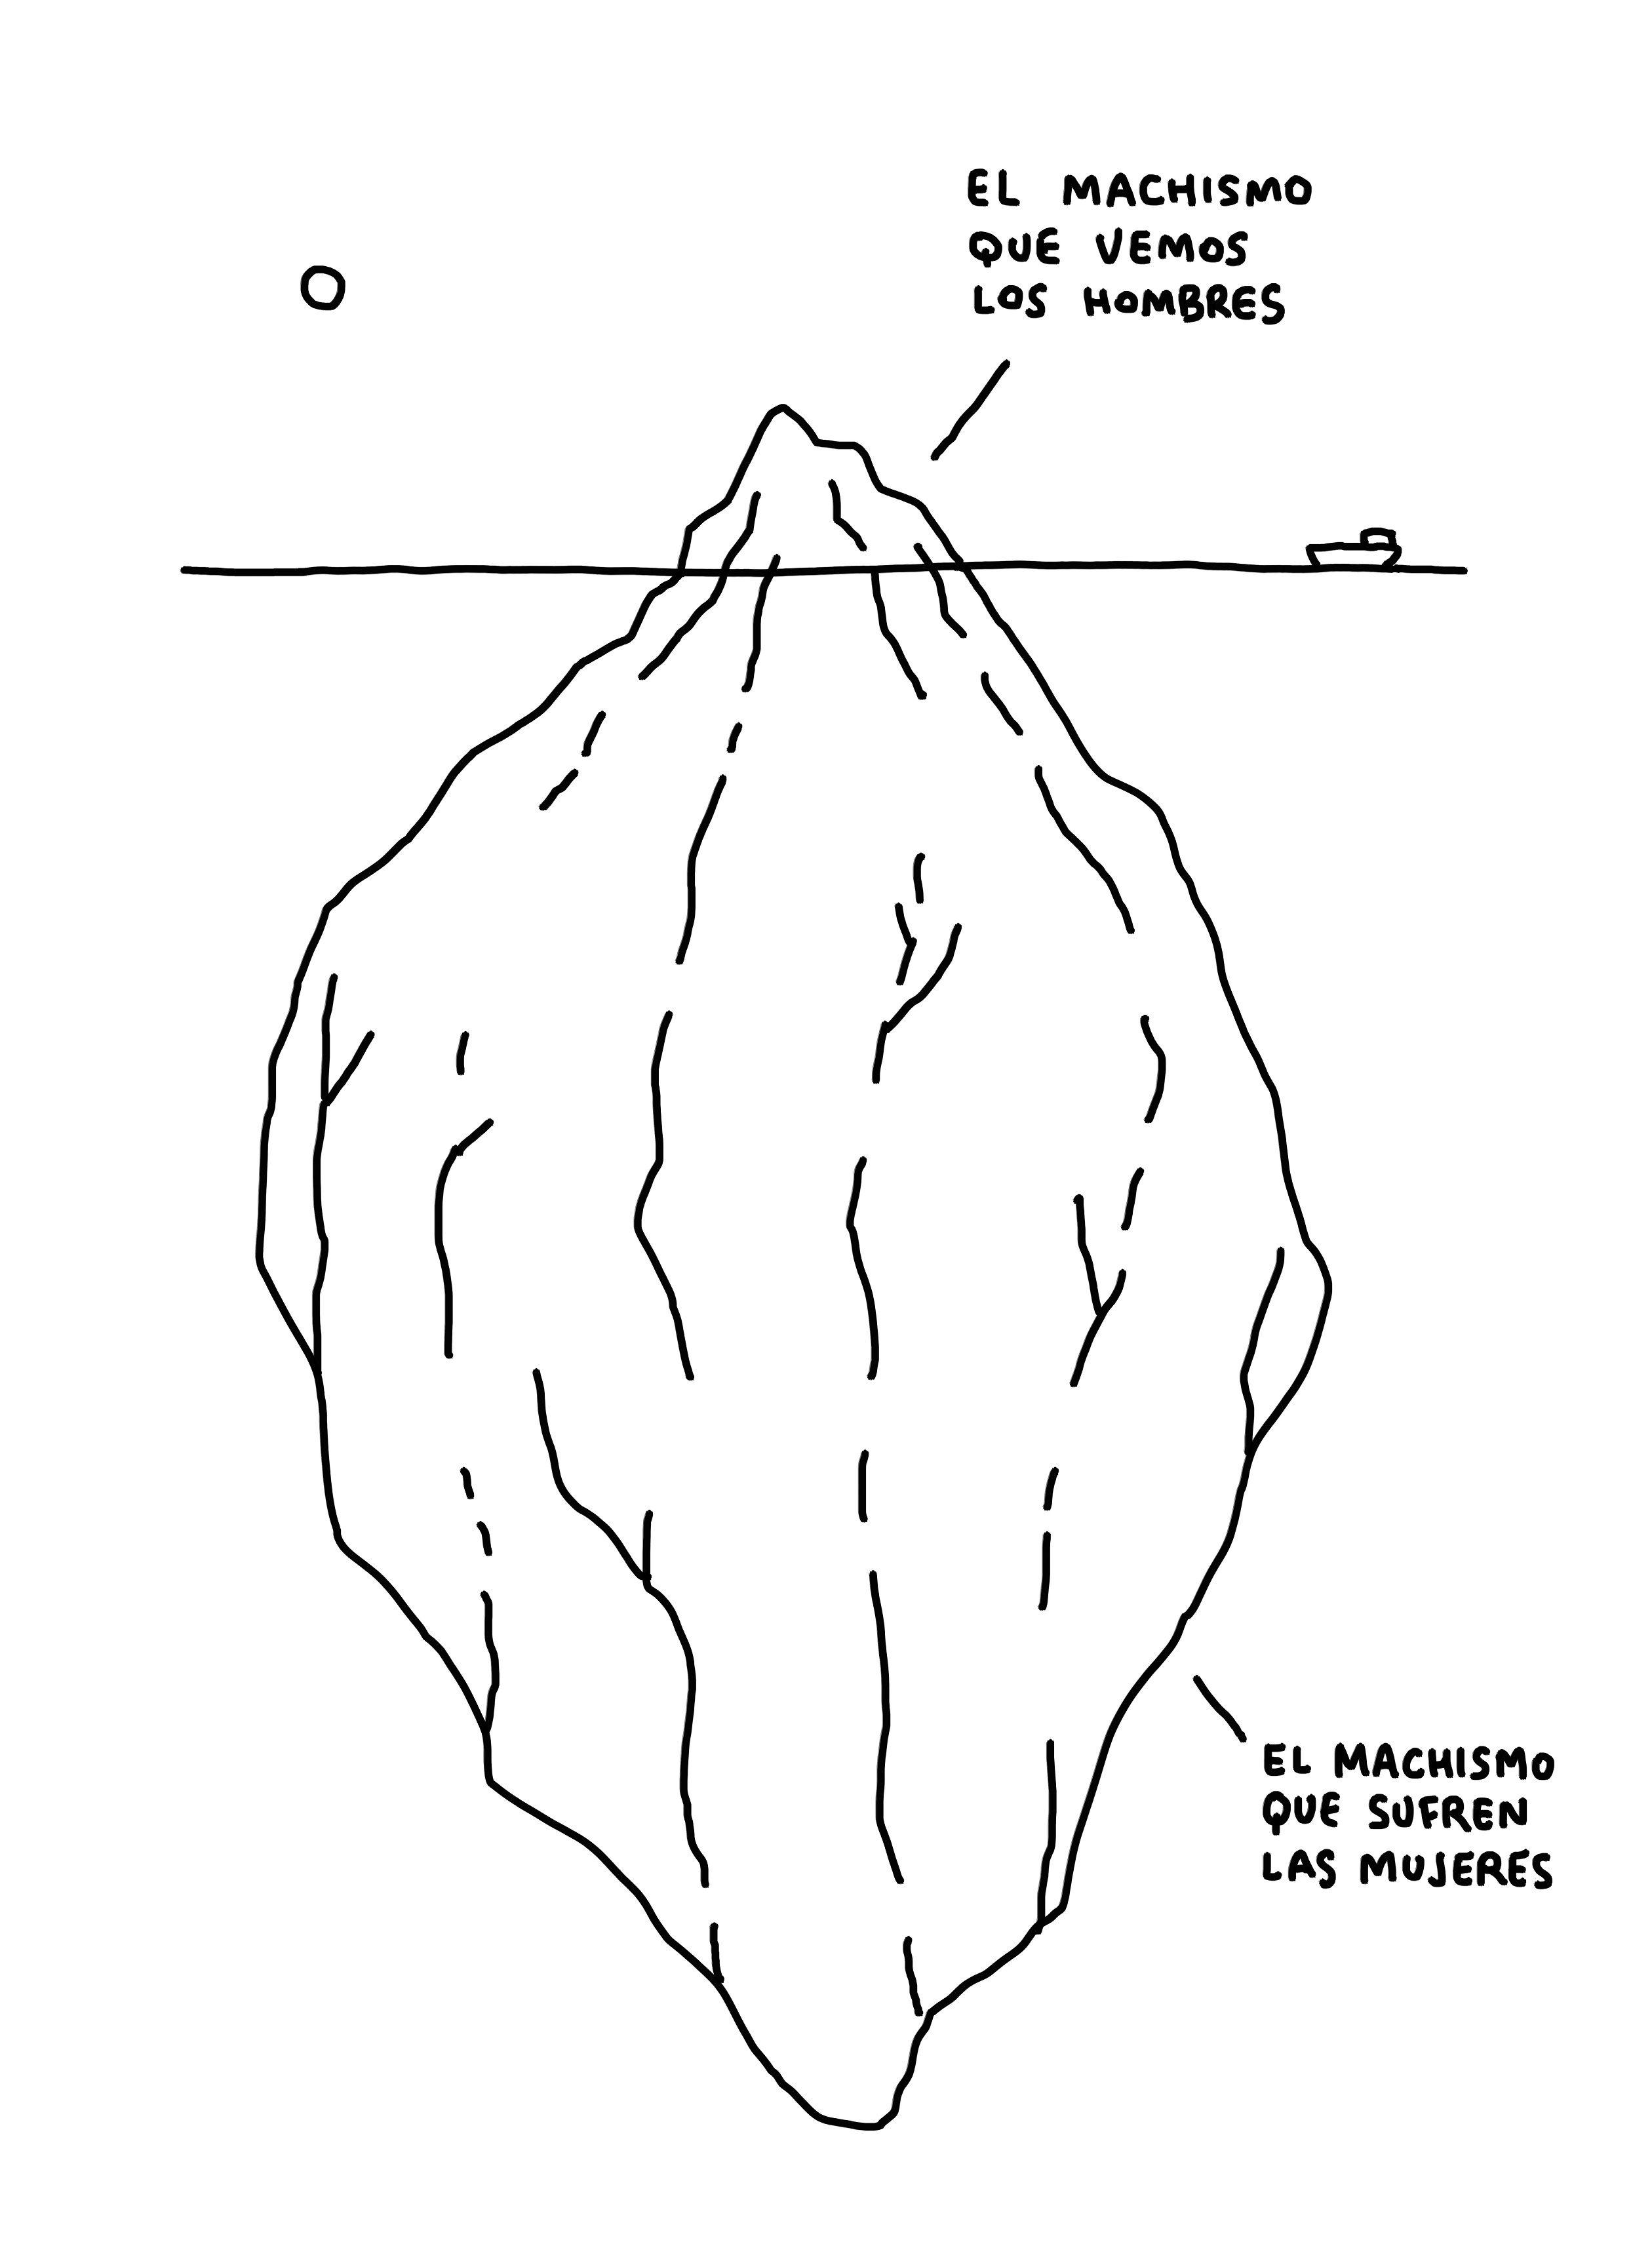 El iceberg del machismo, según Javirroyo